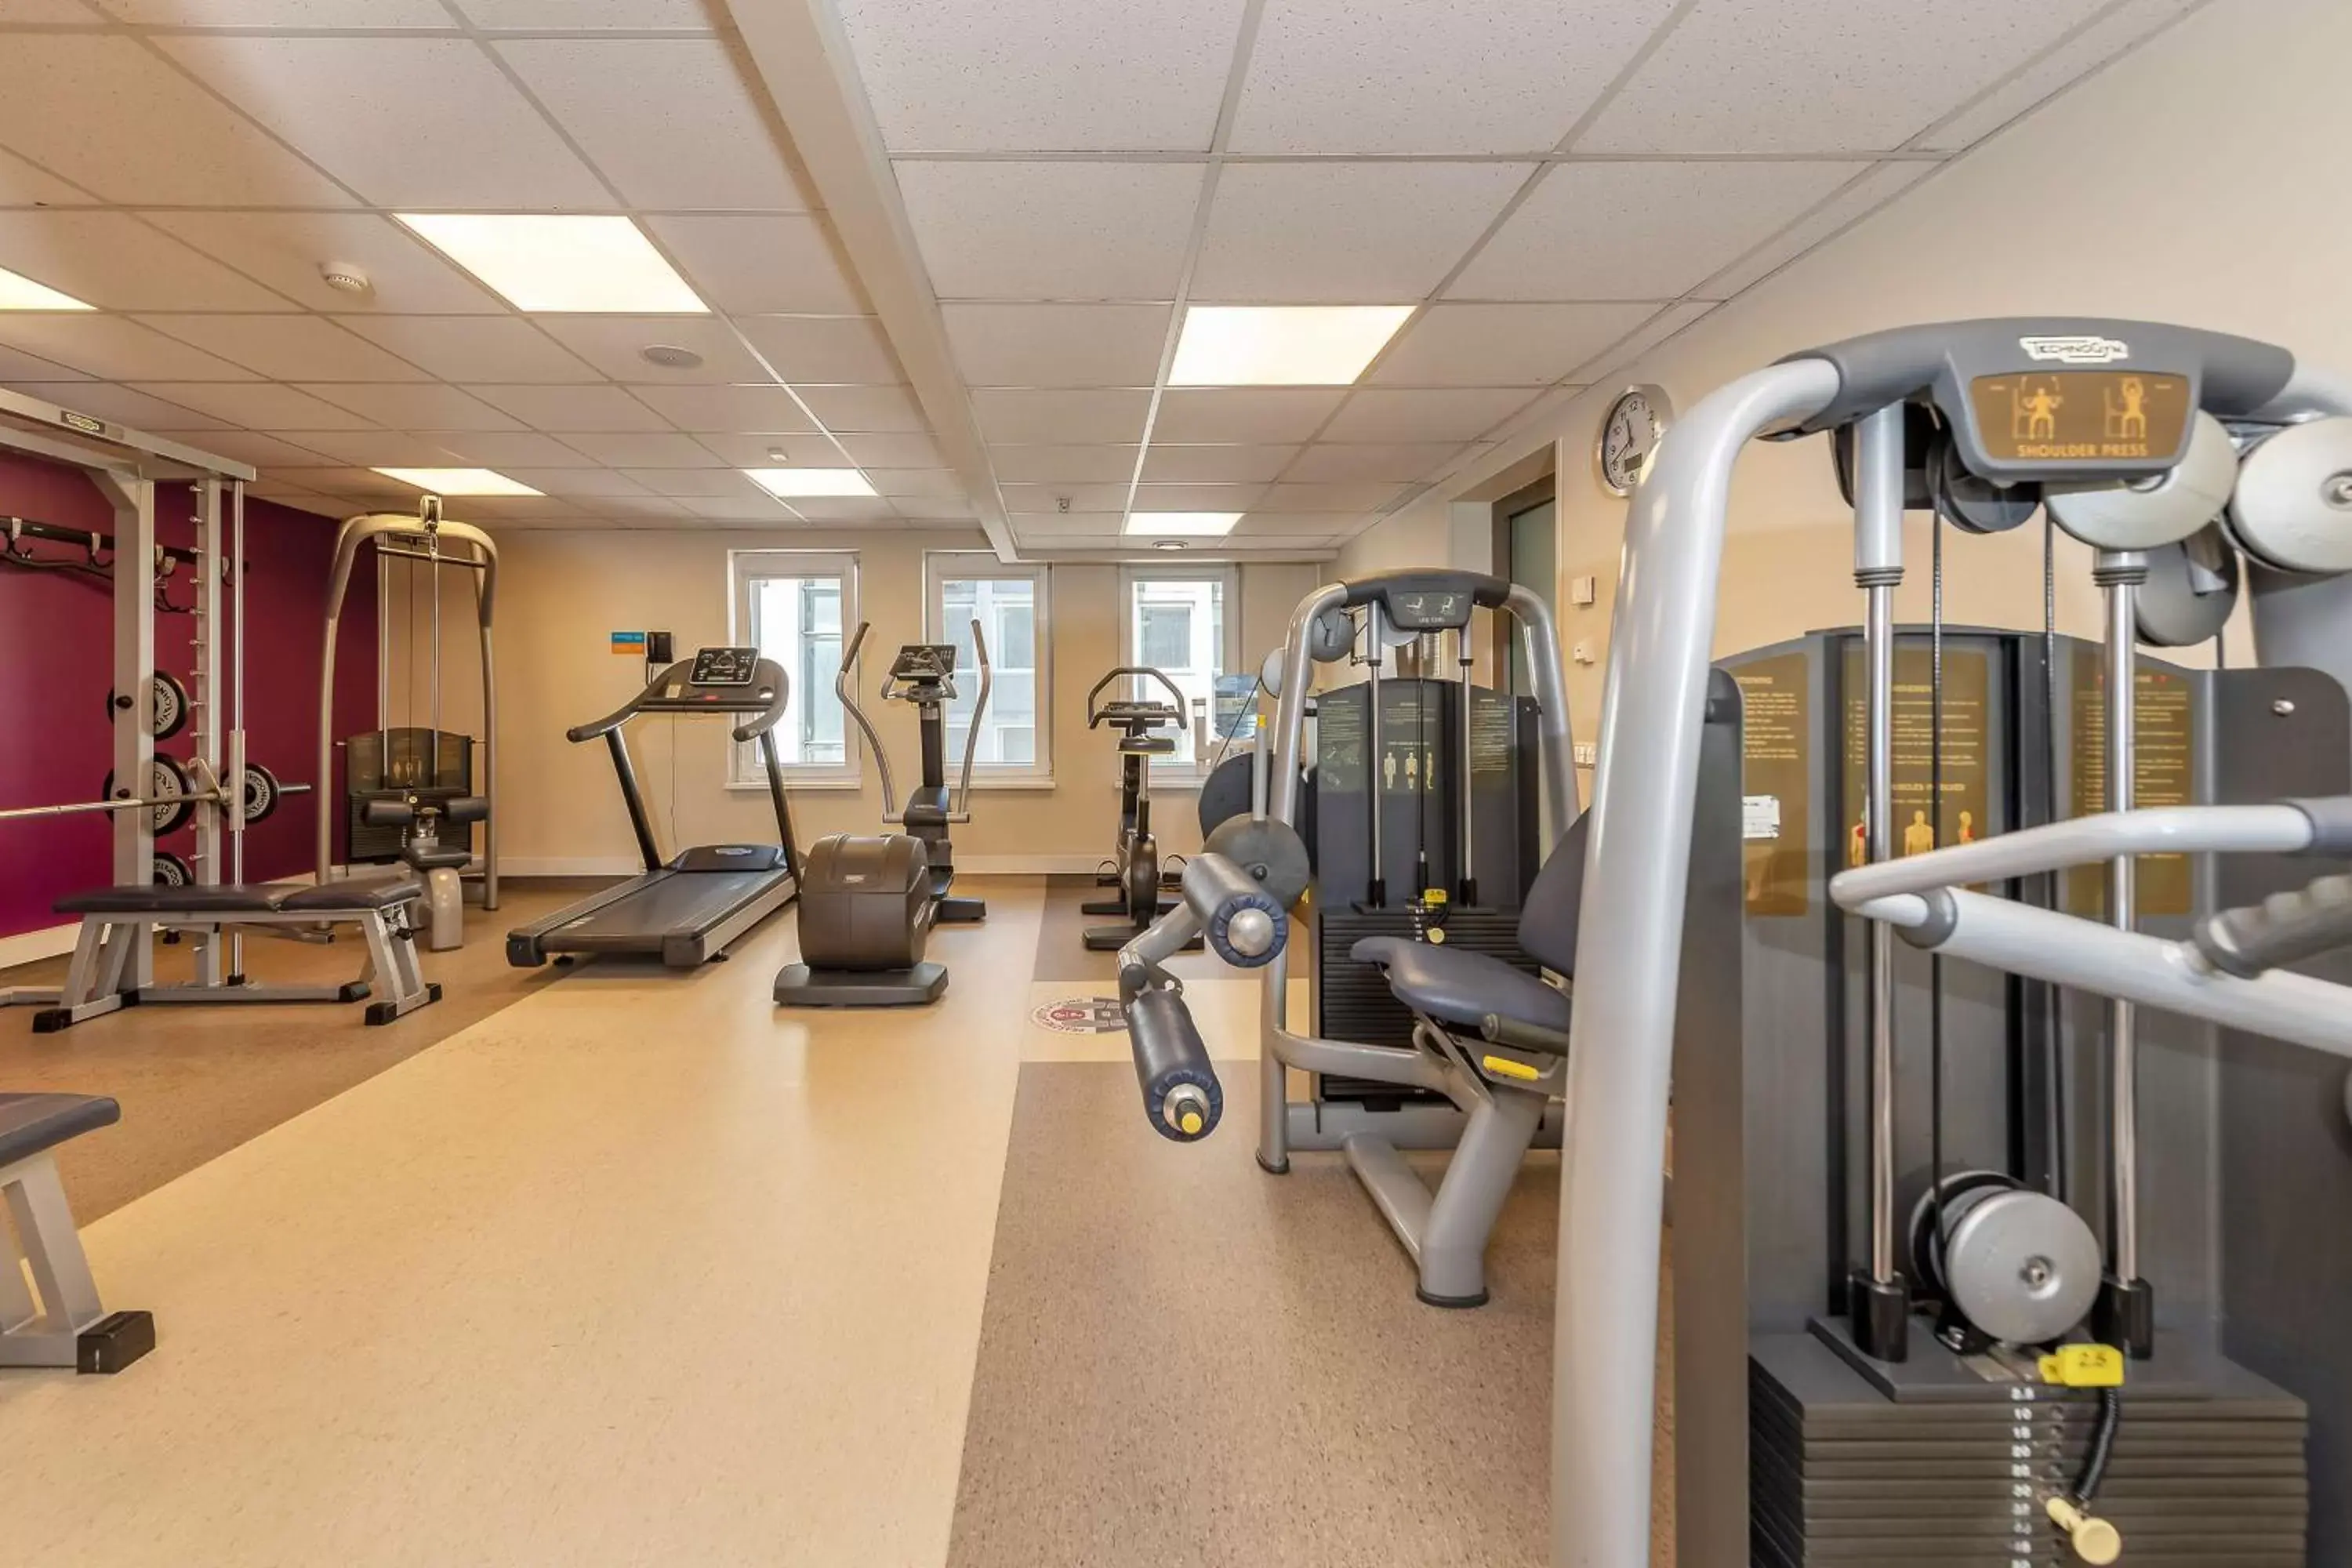 Fitness centre/facilities, Fitness Center/Facilities in Radisson Hotel Kaunas